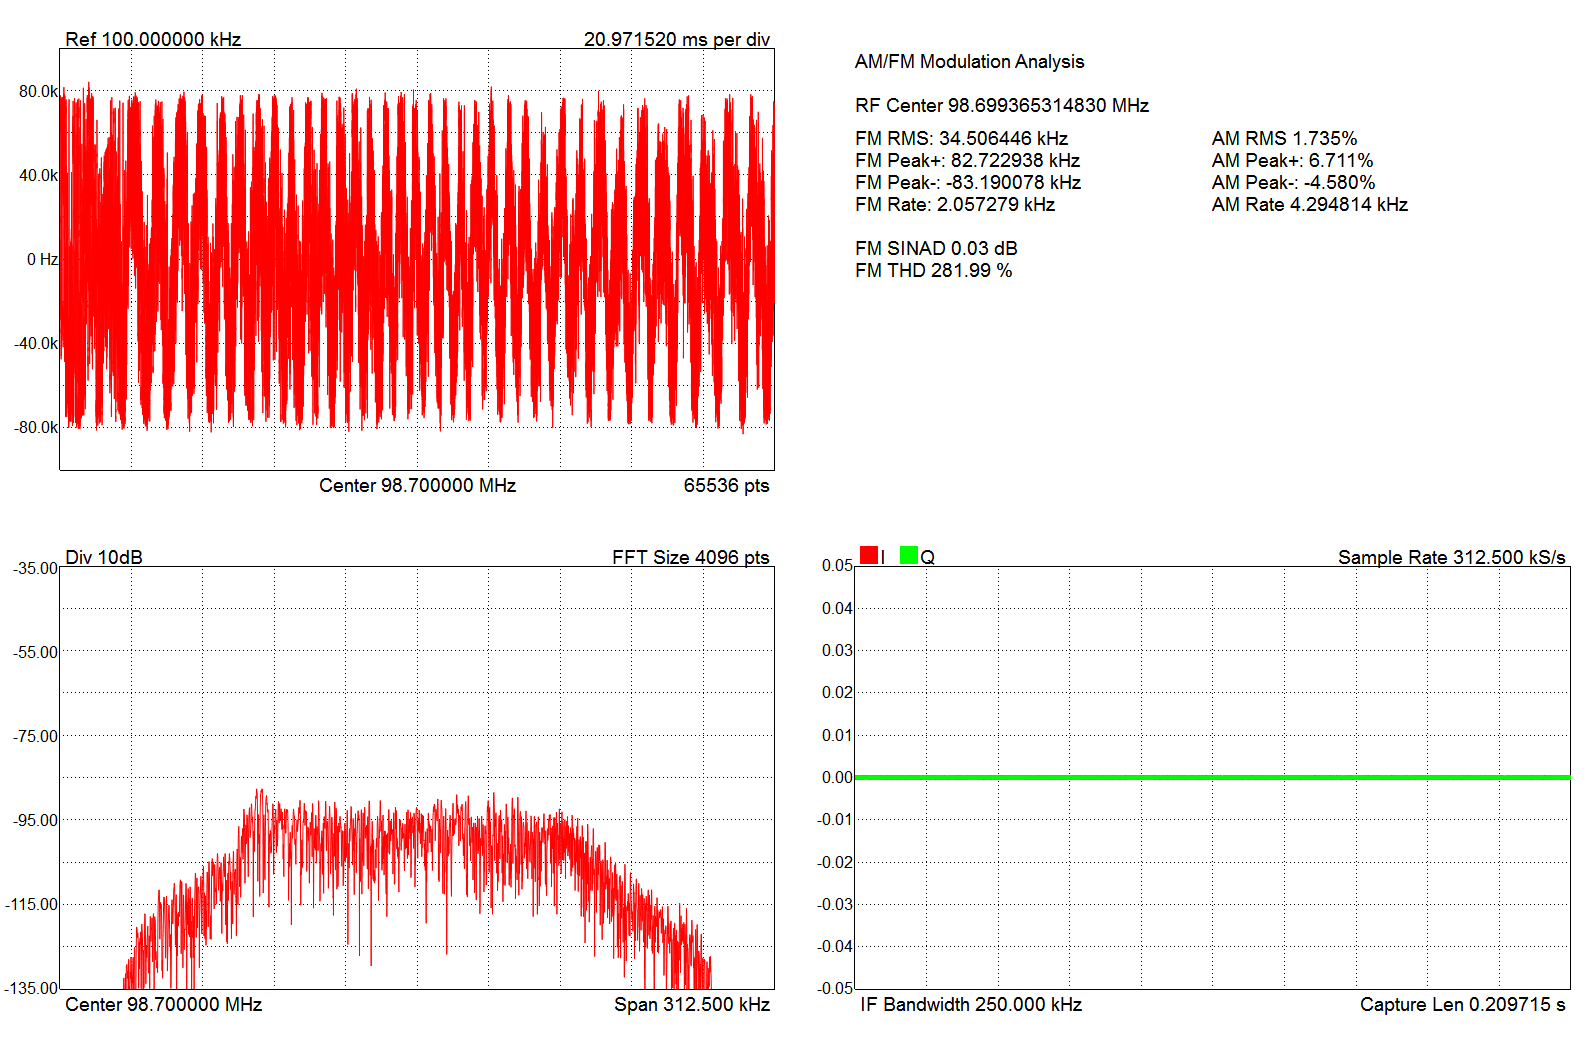 Measuring the modulation quality of an FM radio transmission